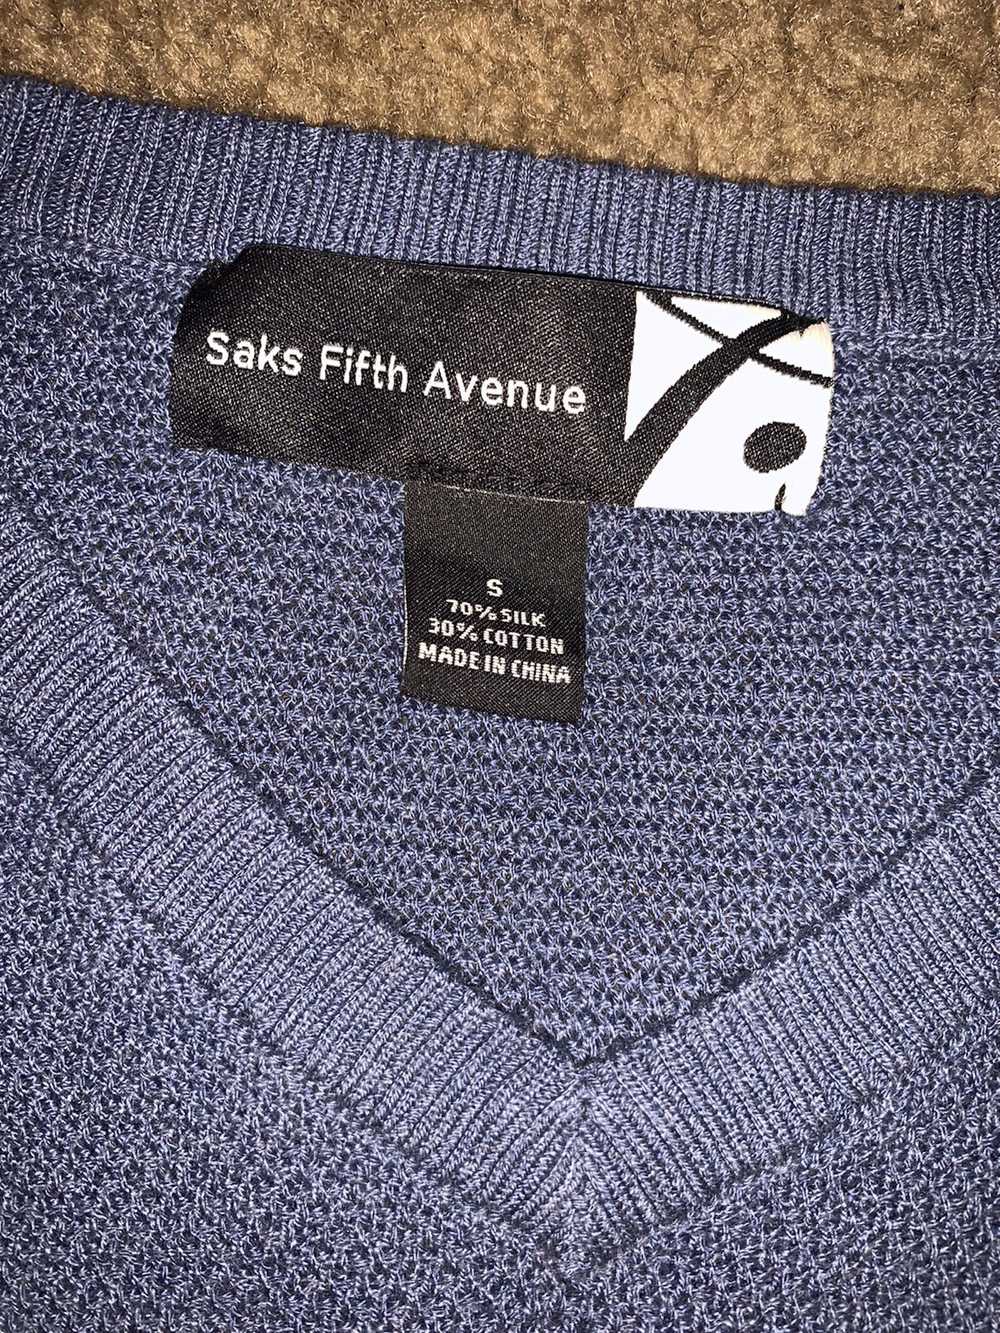 Saks Fifth Avenue Saks Fifth Avenue V-neck Sweater - image 2